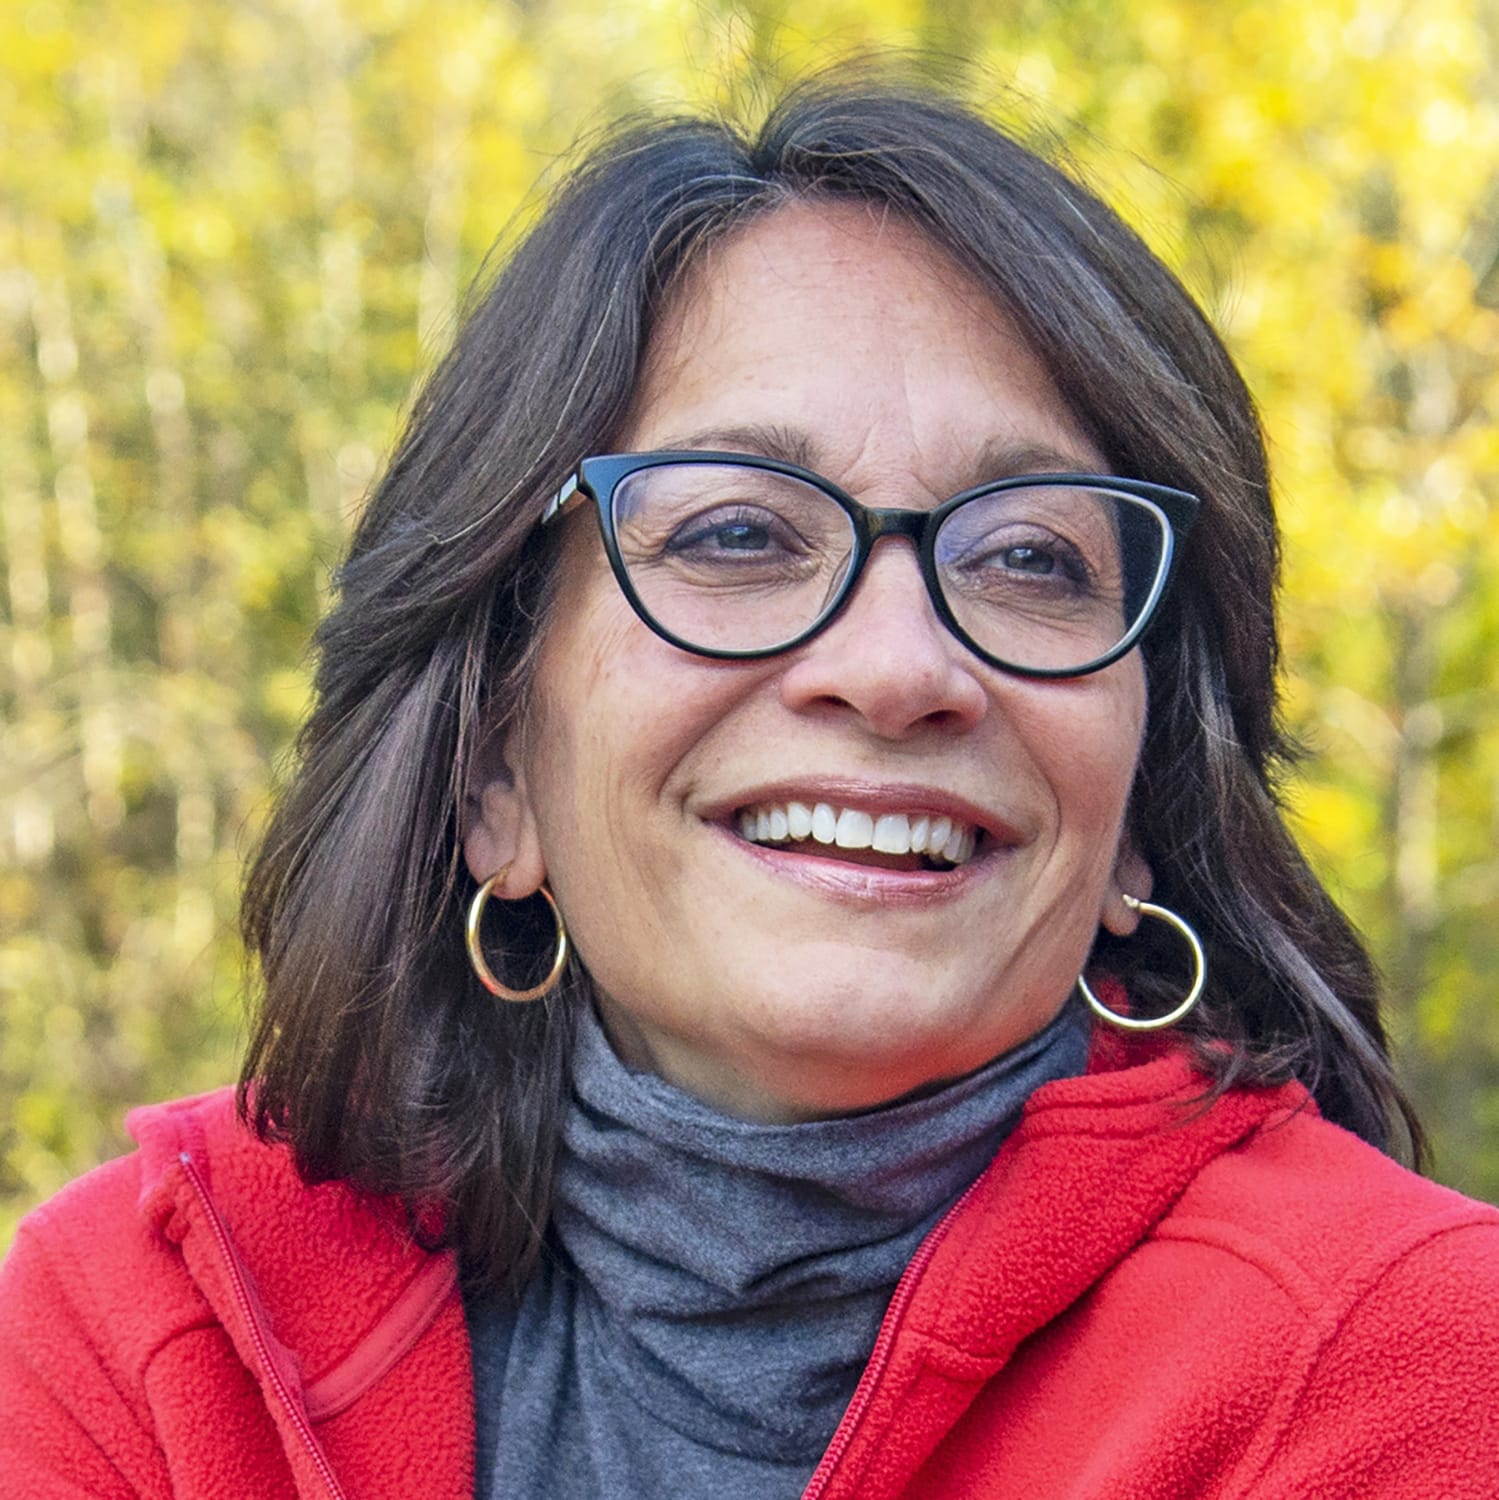 YA author Meg Medina is nation's 1st Latina ambassador for young people's literature